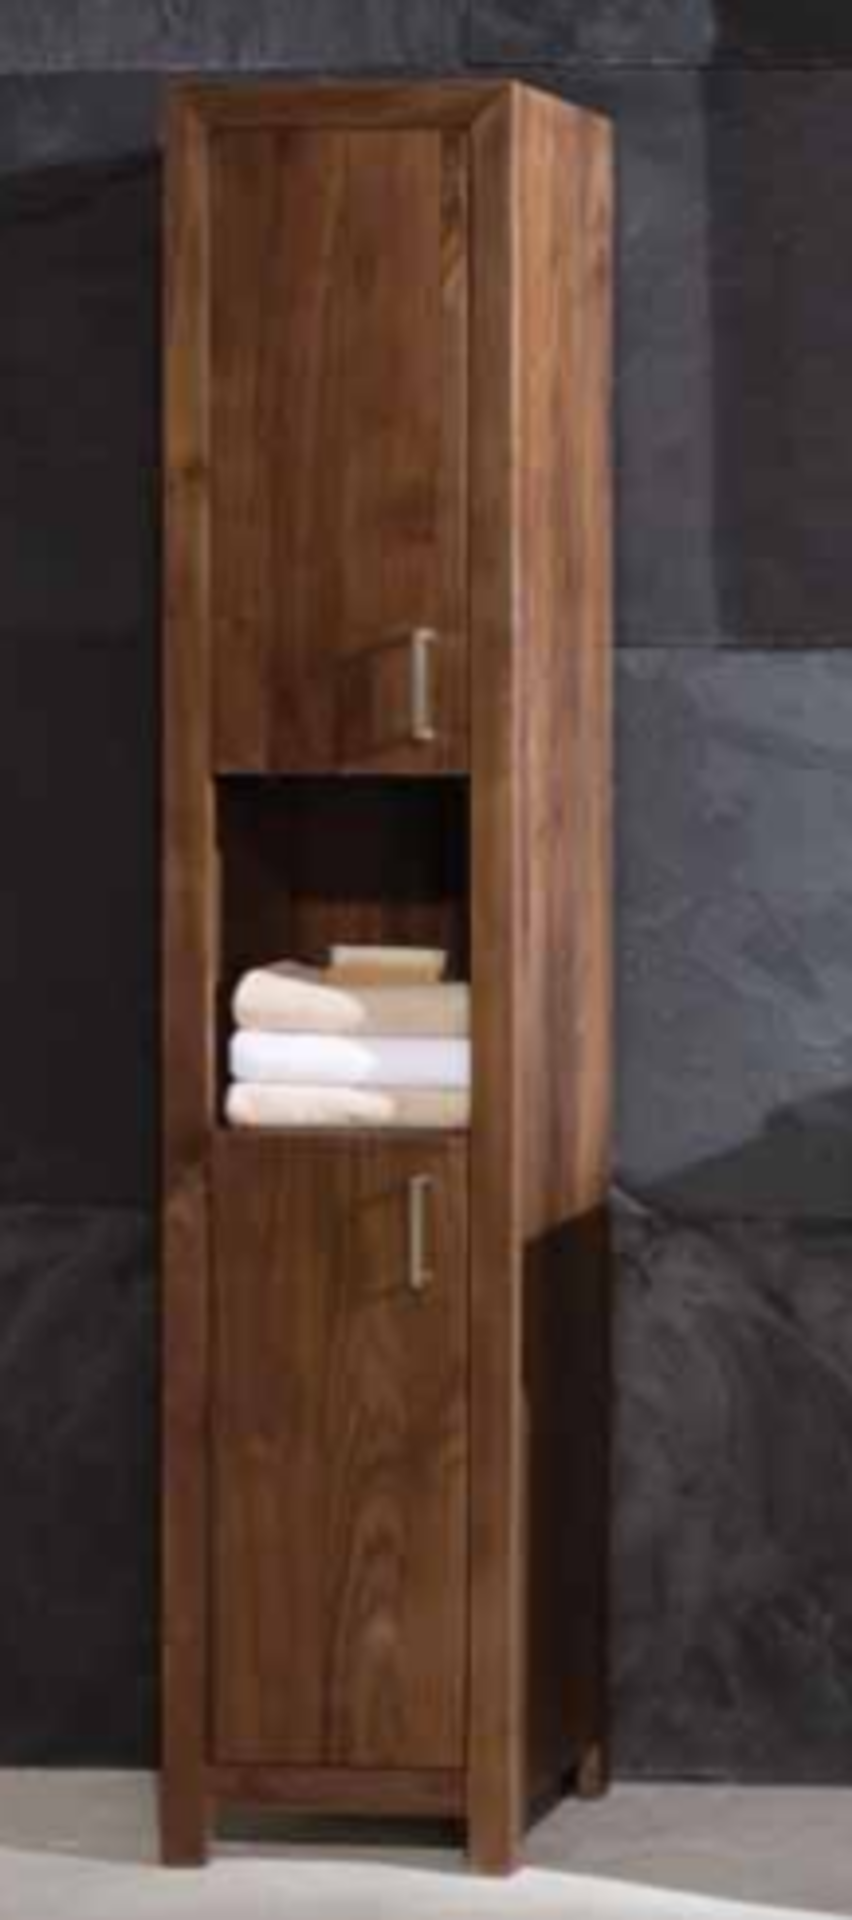 1 x Stonearth Freestanding Tallboy Bathroom Storage Cabinet - American Solid Walnut - RRP £996! - Image 6 of 14